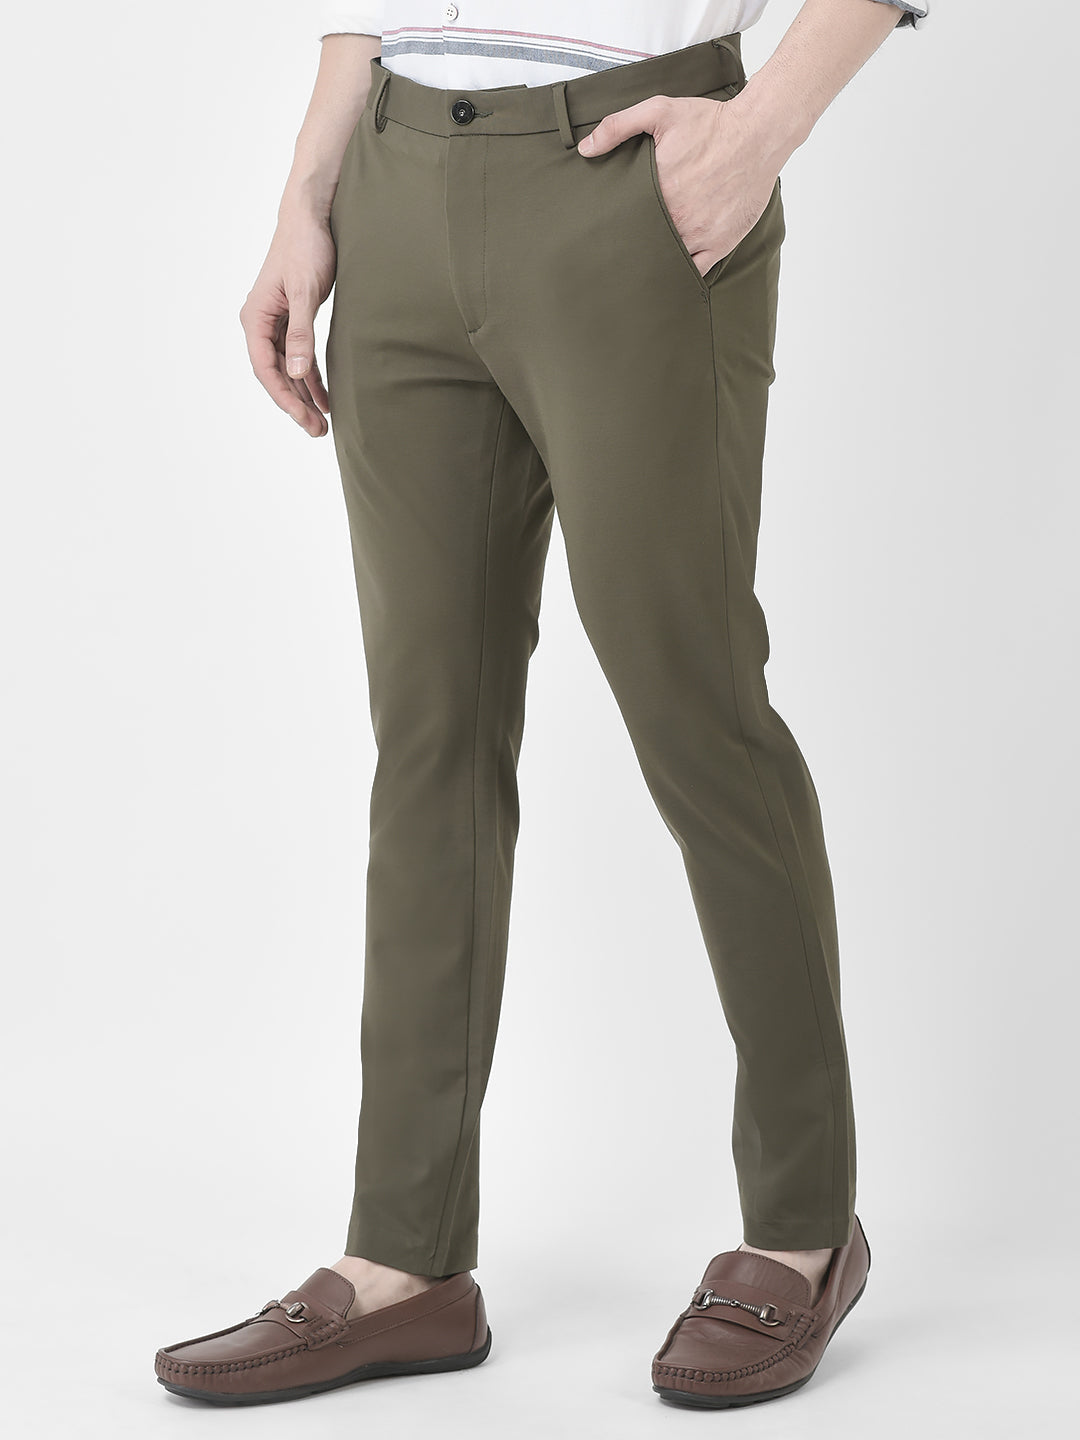  Plain Olive Green Trousers